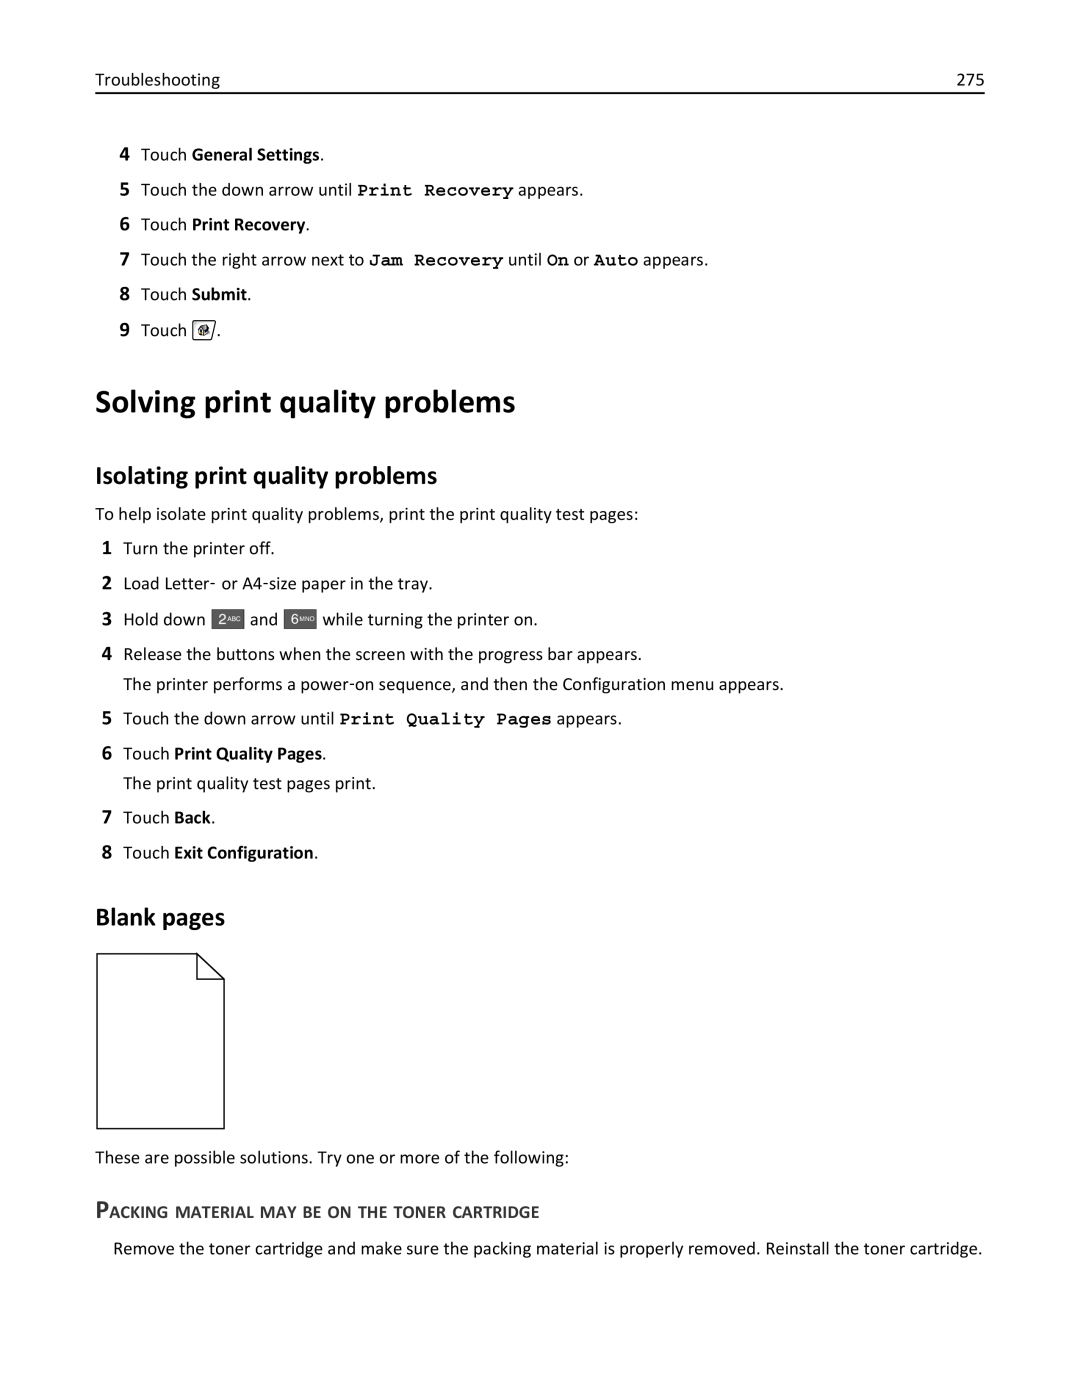 Lexmark 432, 19Z0101 Solving print quality problems, Isolating print quality problems, Blank pages, Touch General Settings 